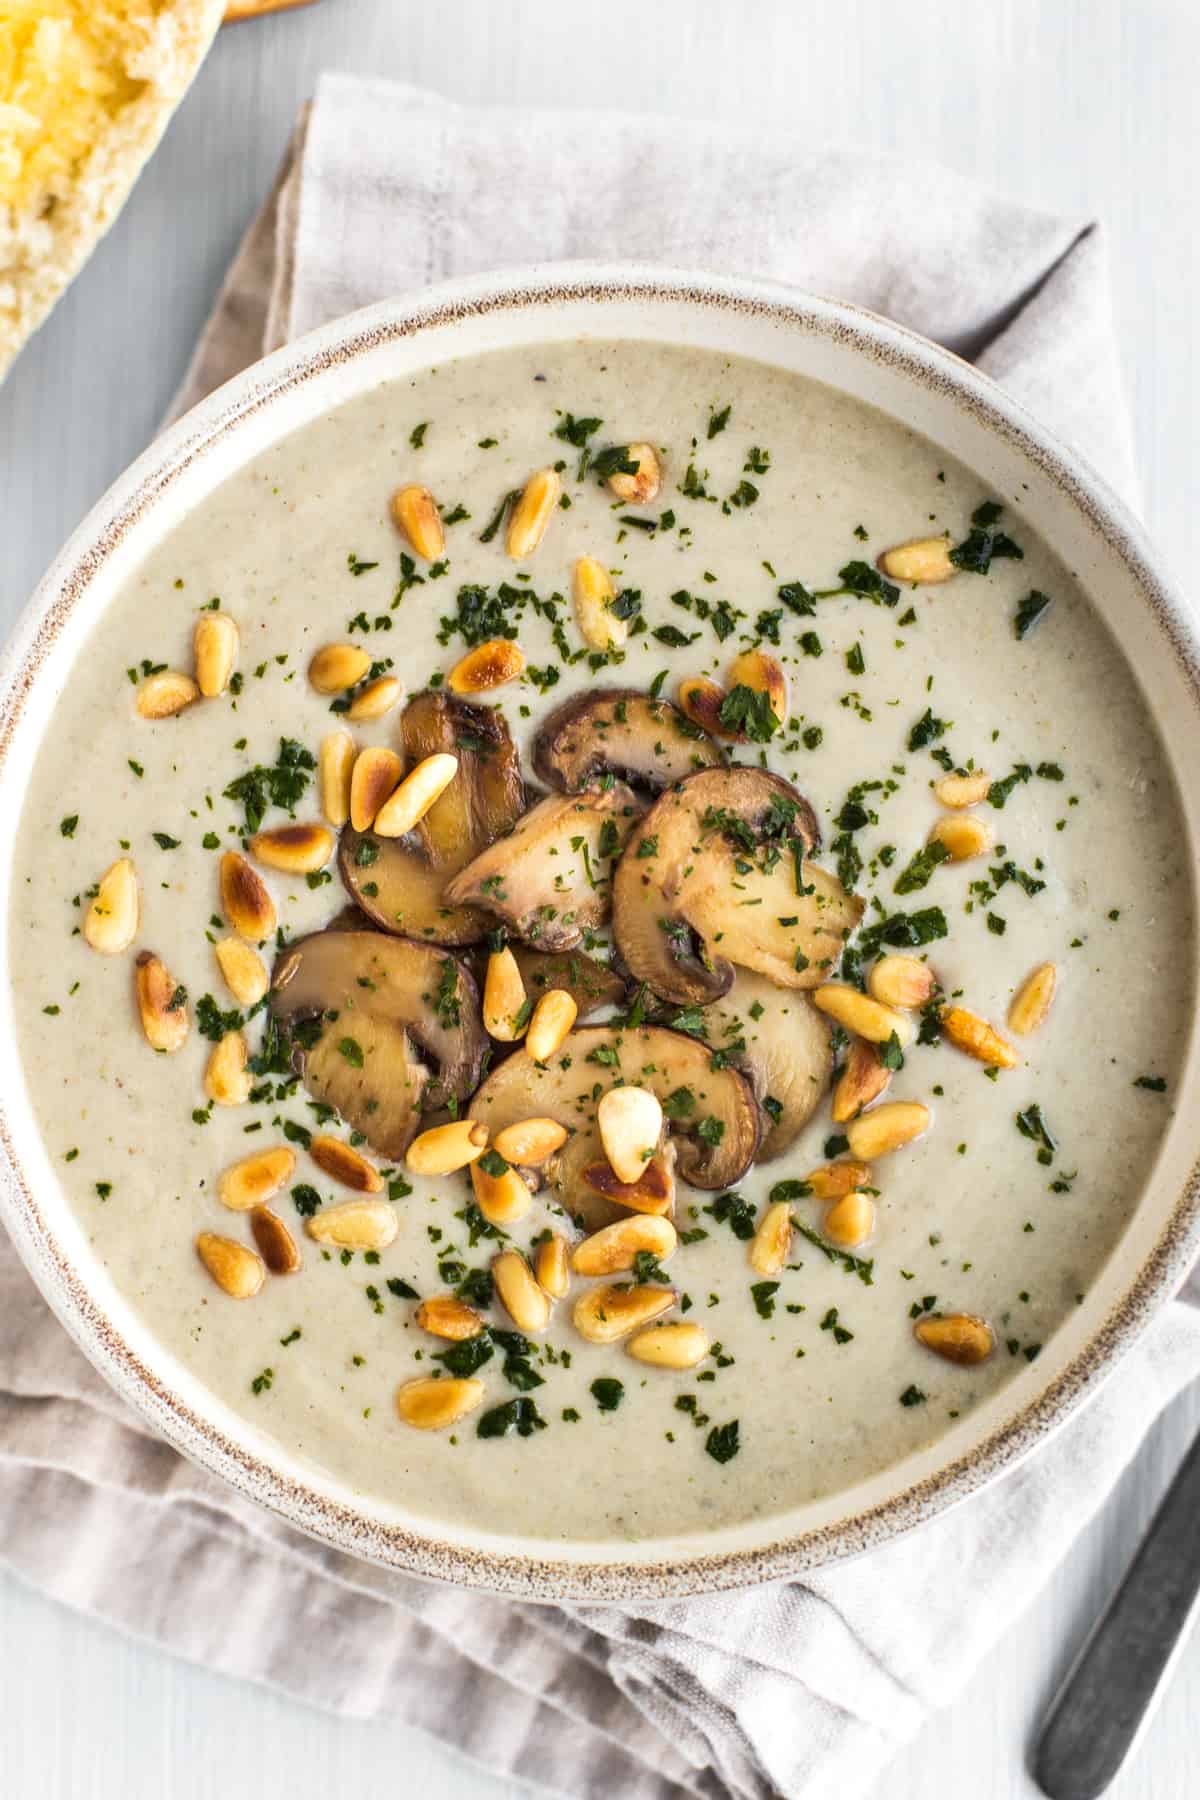 https://www.easycheesyvegetarian.com/wp-content/uploads/2012/01/Vegan-cream-of-mushroom-soup-12.jpg